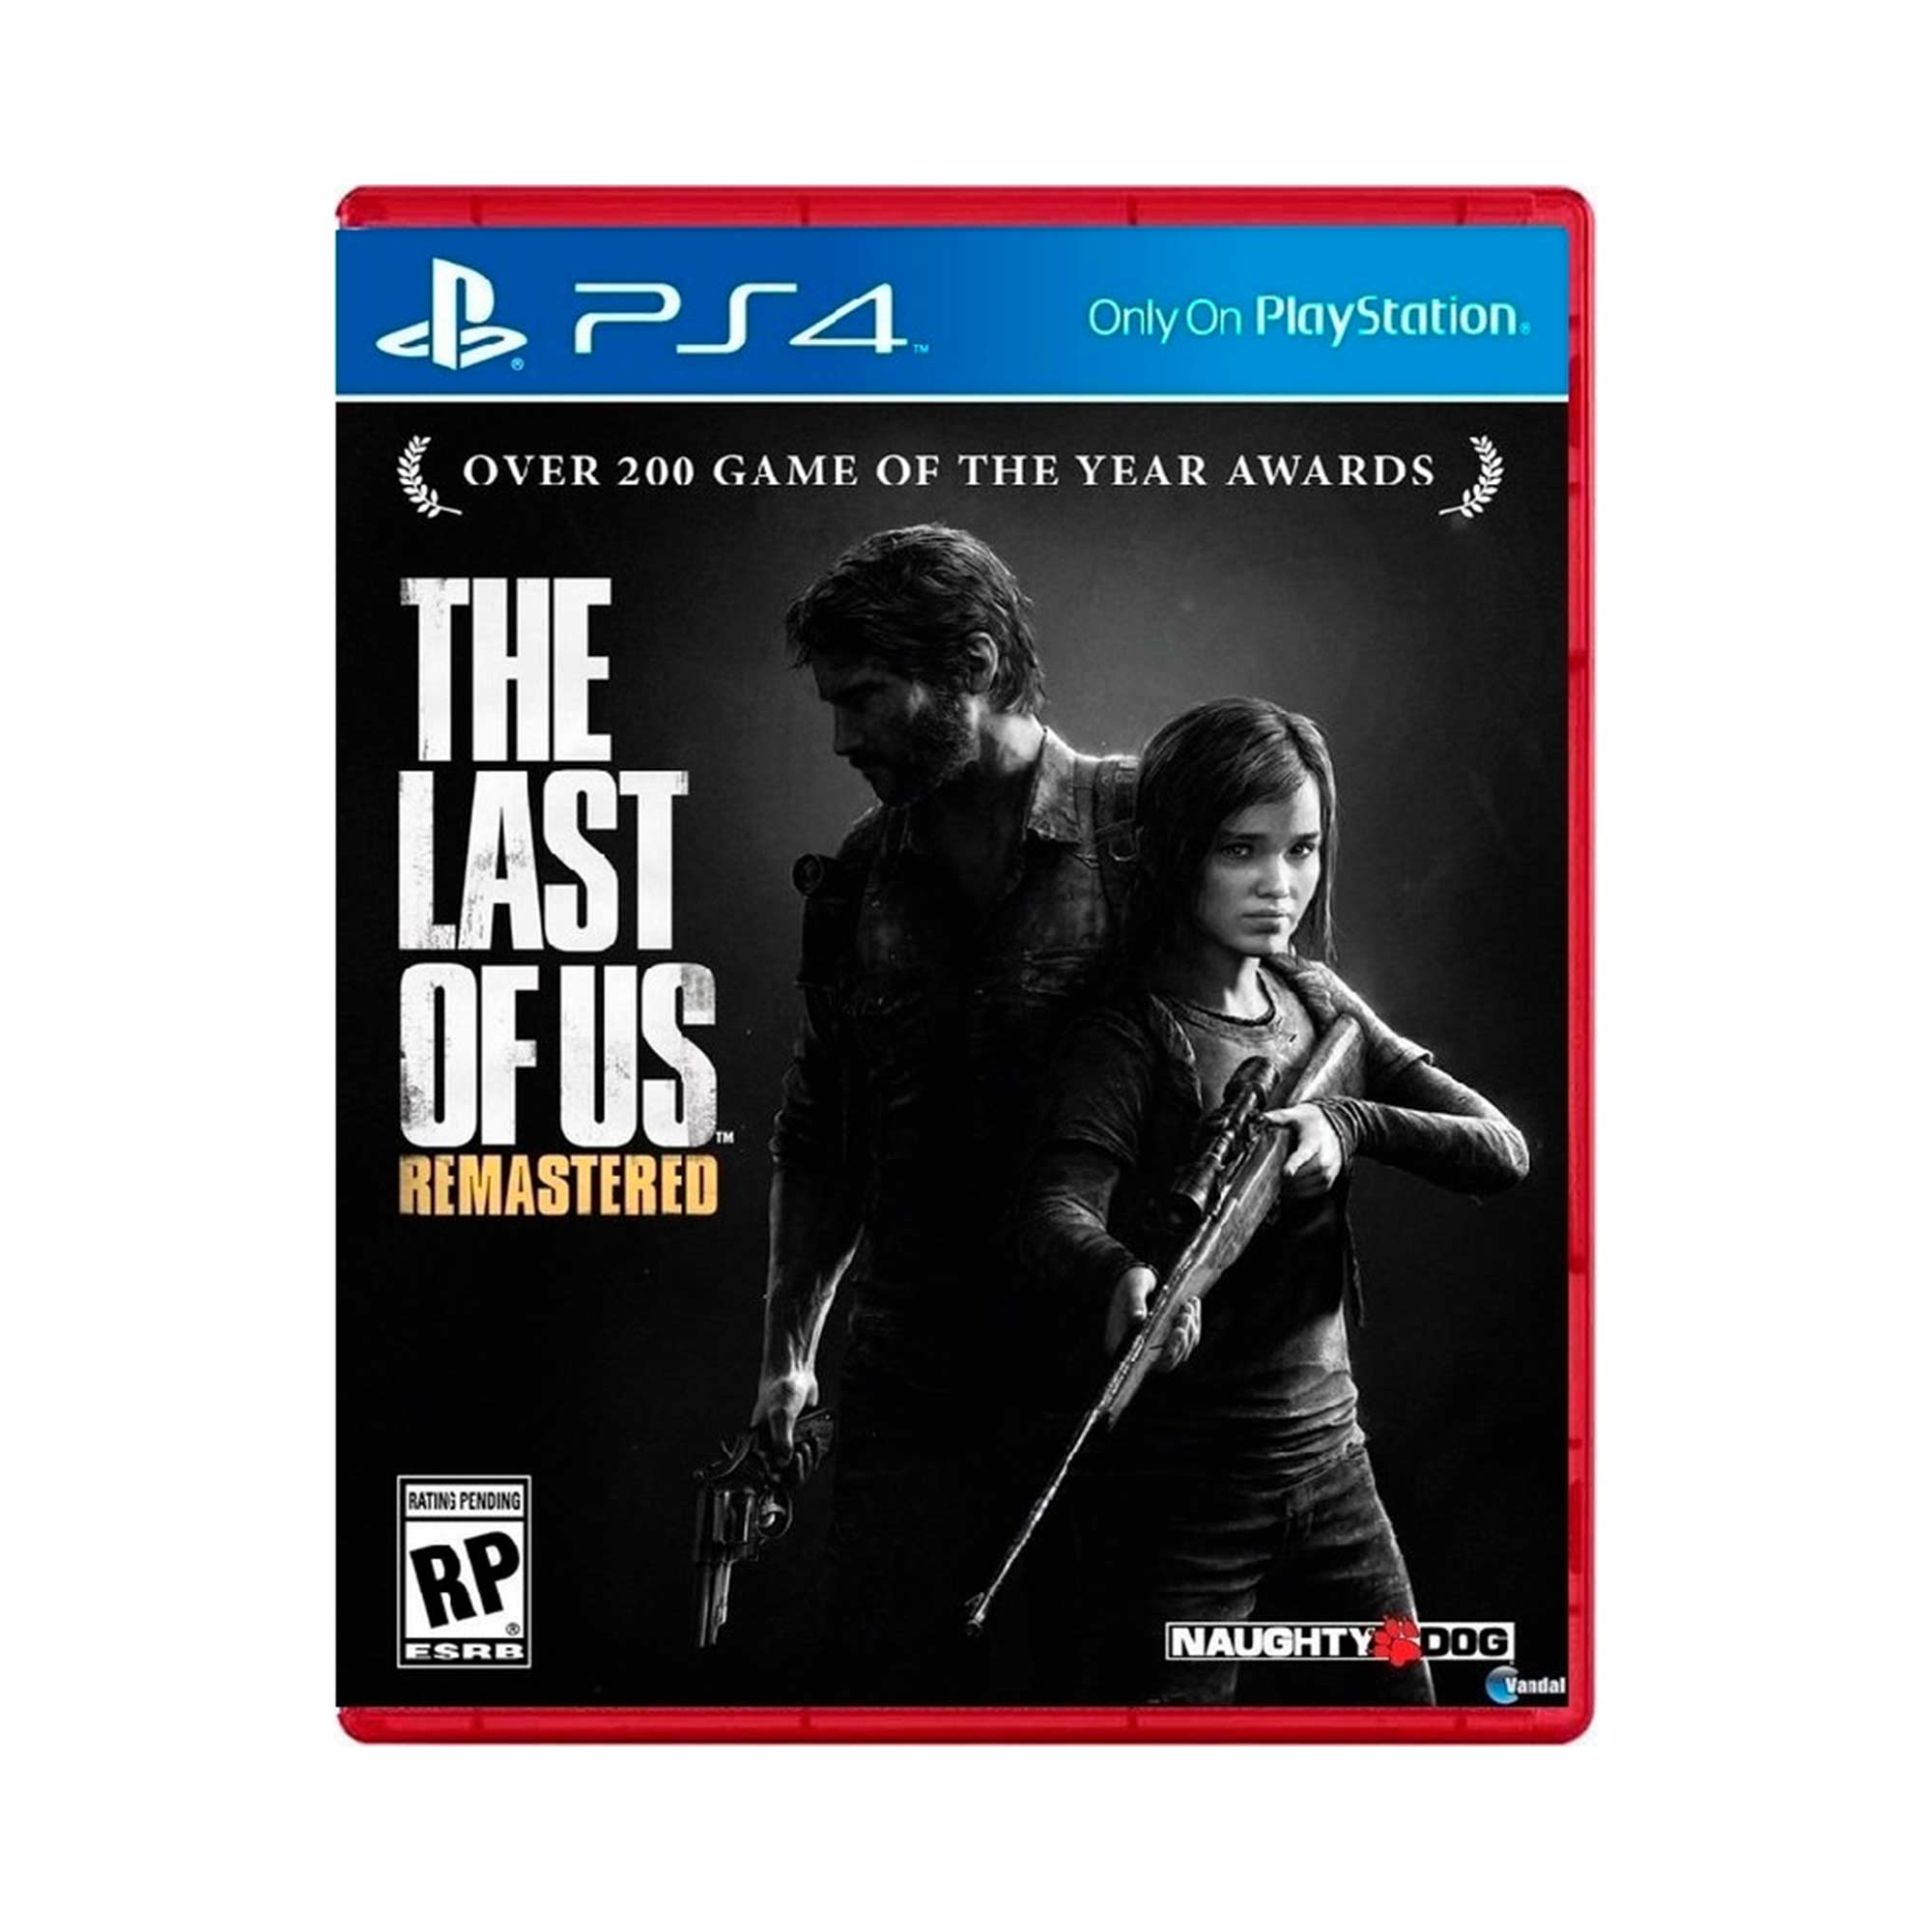 The Last of Us Remasterizado - Videojuego (PS4) - Vandal